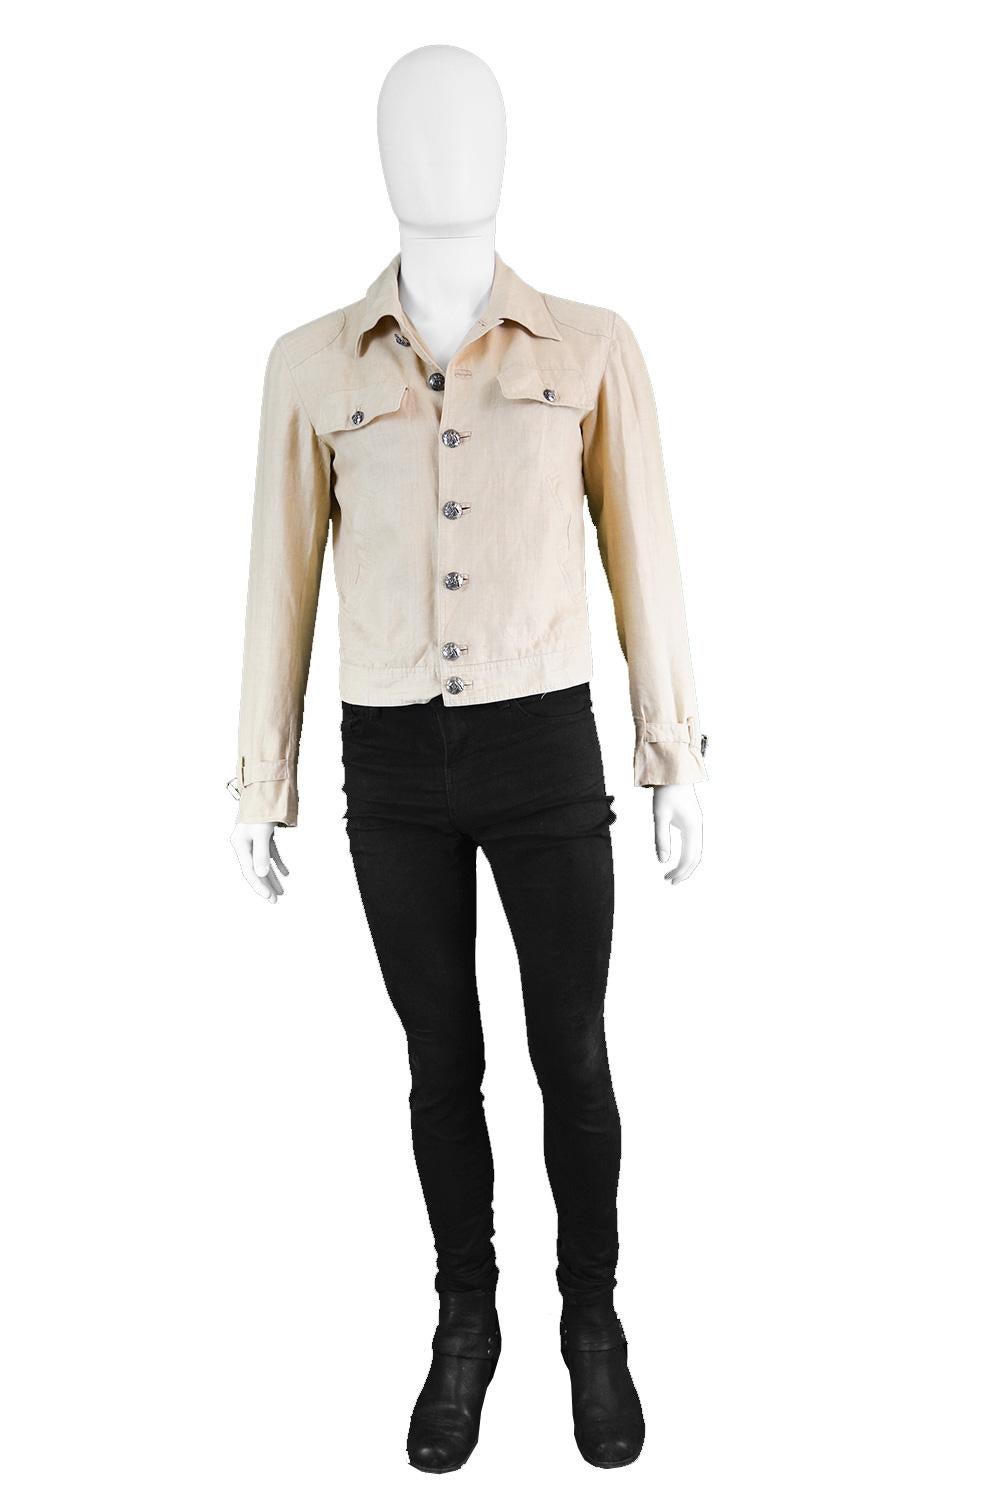 Gianni Versace Couture Pure Cream Linen Men's Unisex Jacket, S/S 2003

Size: Marked 46 which is roughly a men's XS. Please check measurements. 
Chest - 38” / 96cm
Waist - 34” / 86cm
Length (Shoulder to Hem) - 20” / 51cm
Shoulder to Shoulder - 18” /